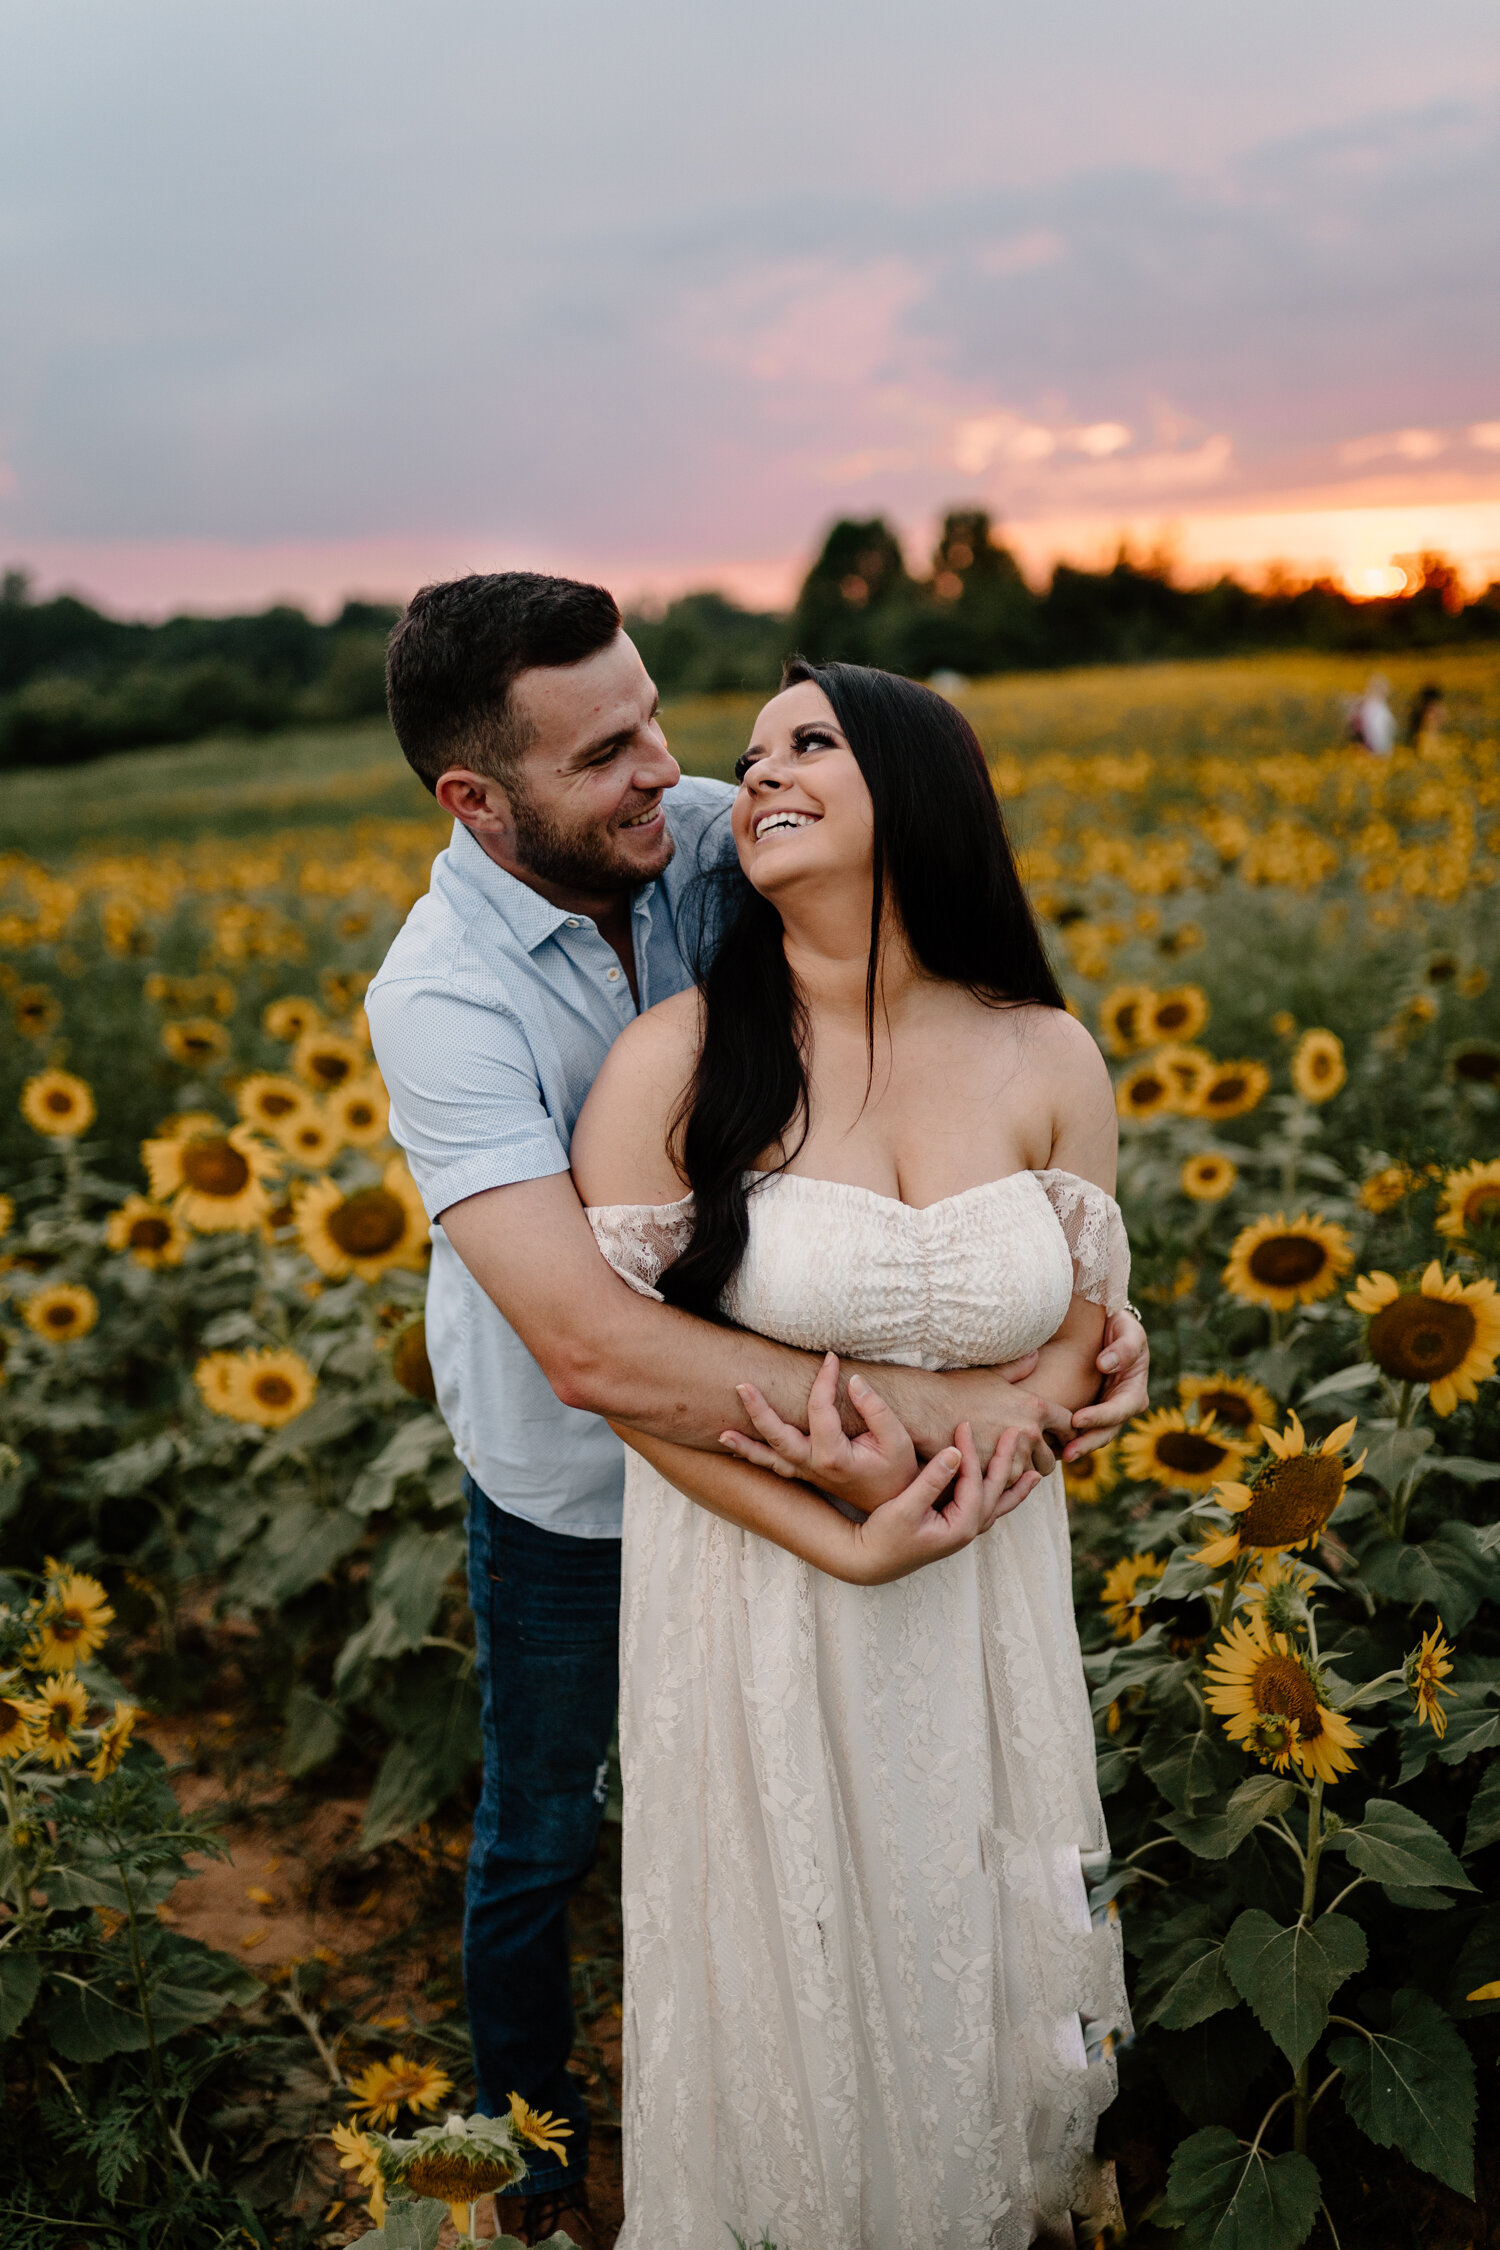 Belews Creek, NC Sunflower Session at Sunset by Kayli LaFon Photography | Dogwood Farms | North Carolina Wedding & Adventurous Photographer